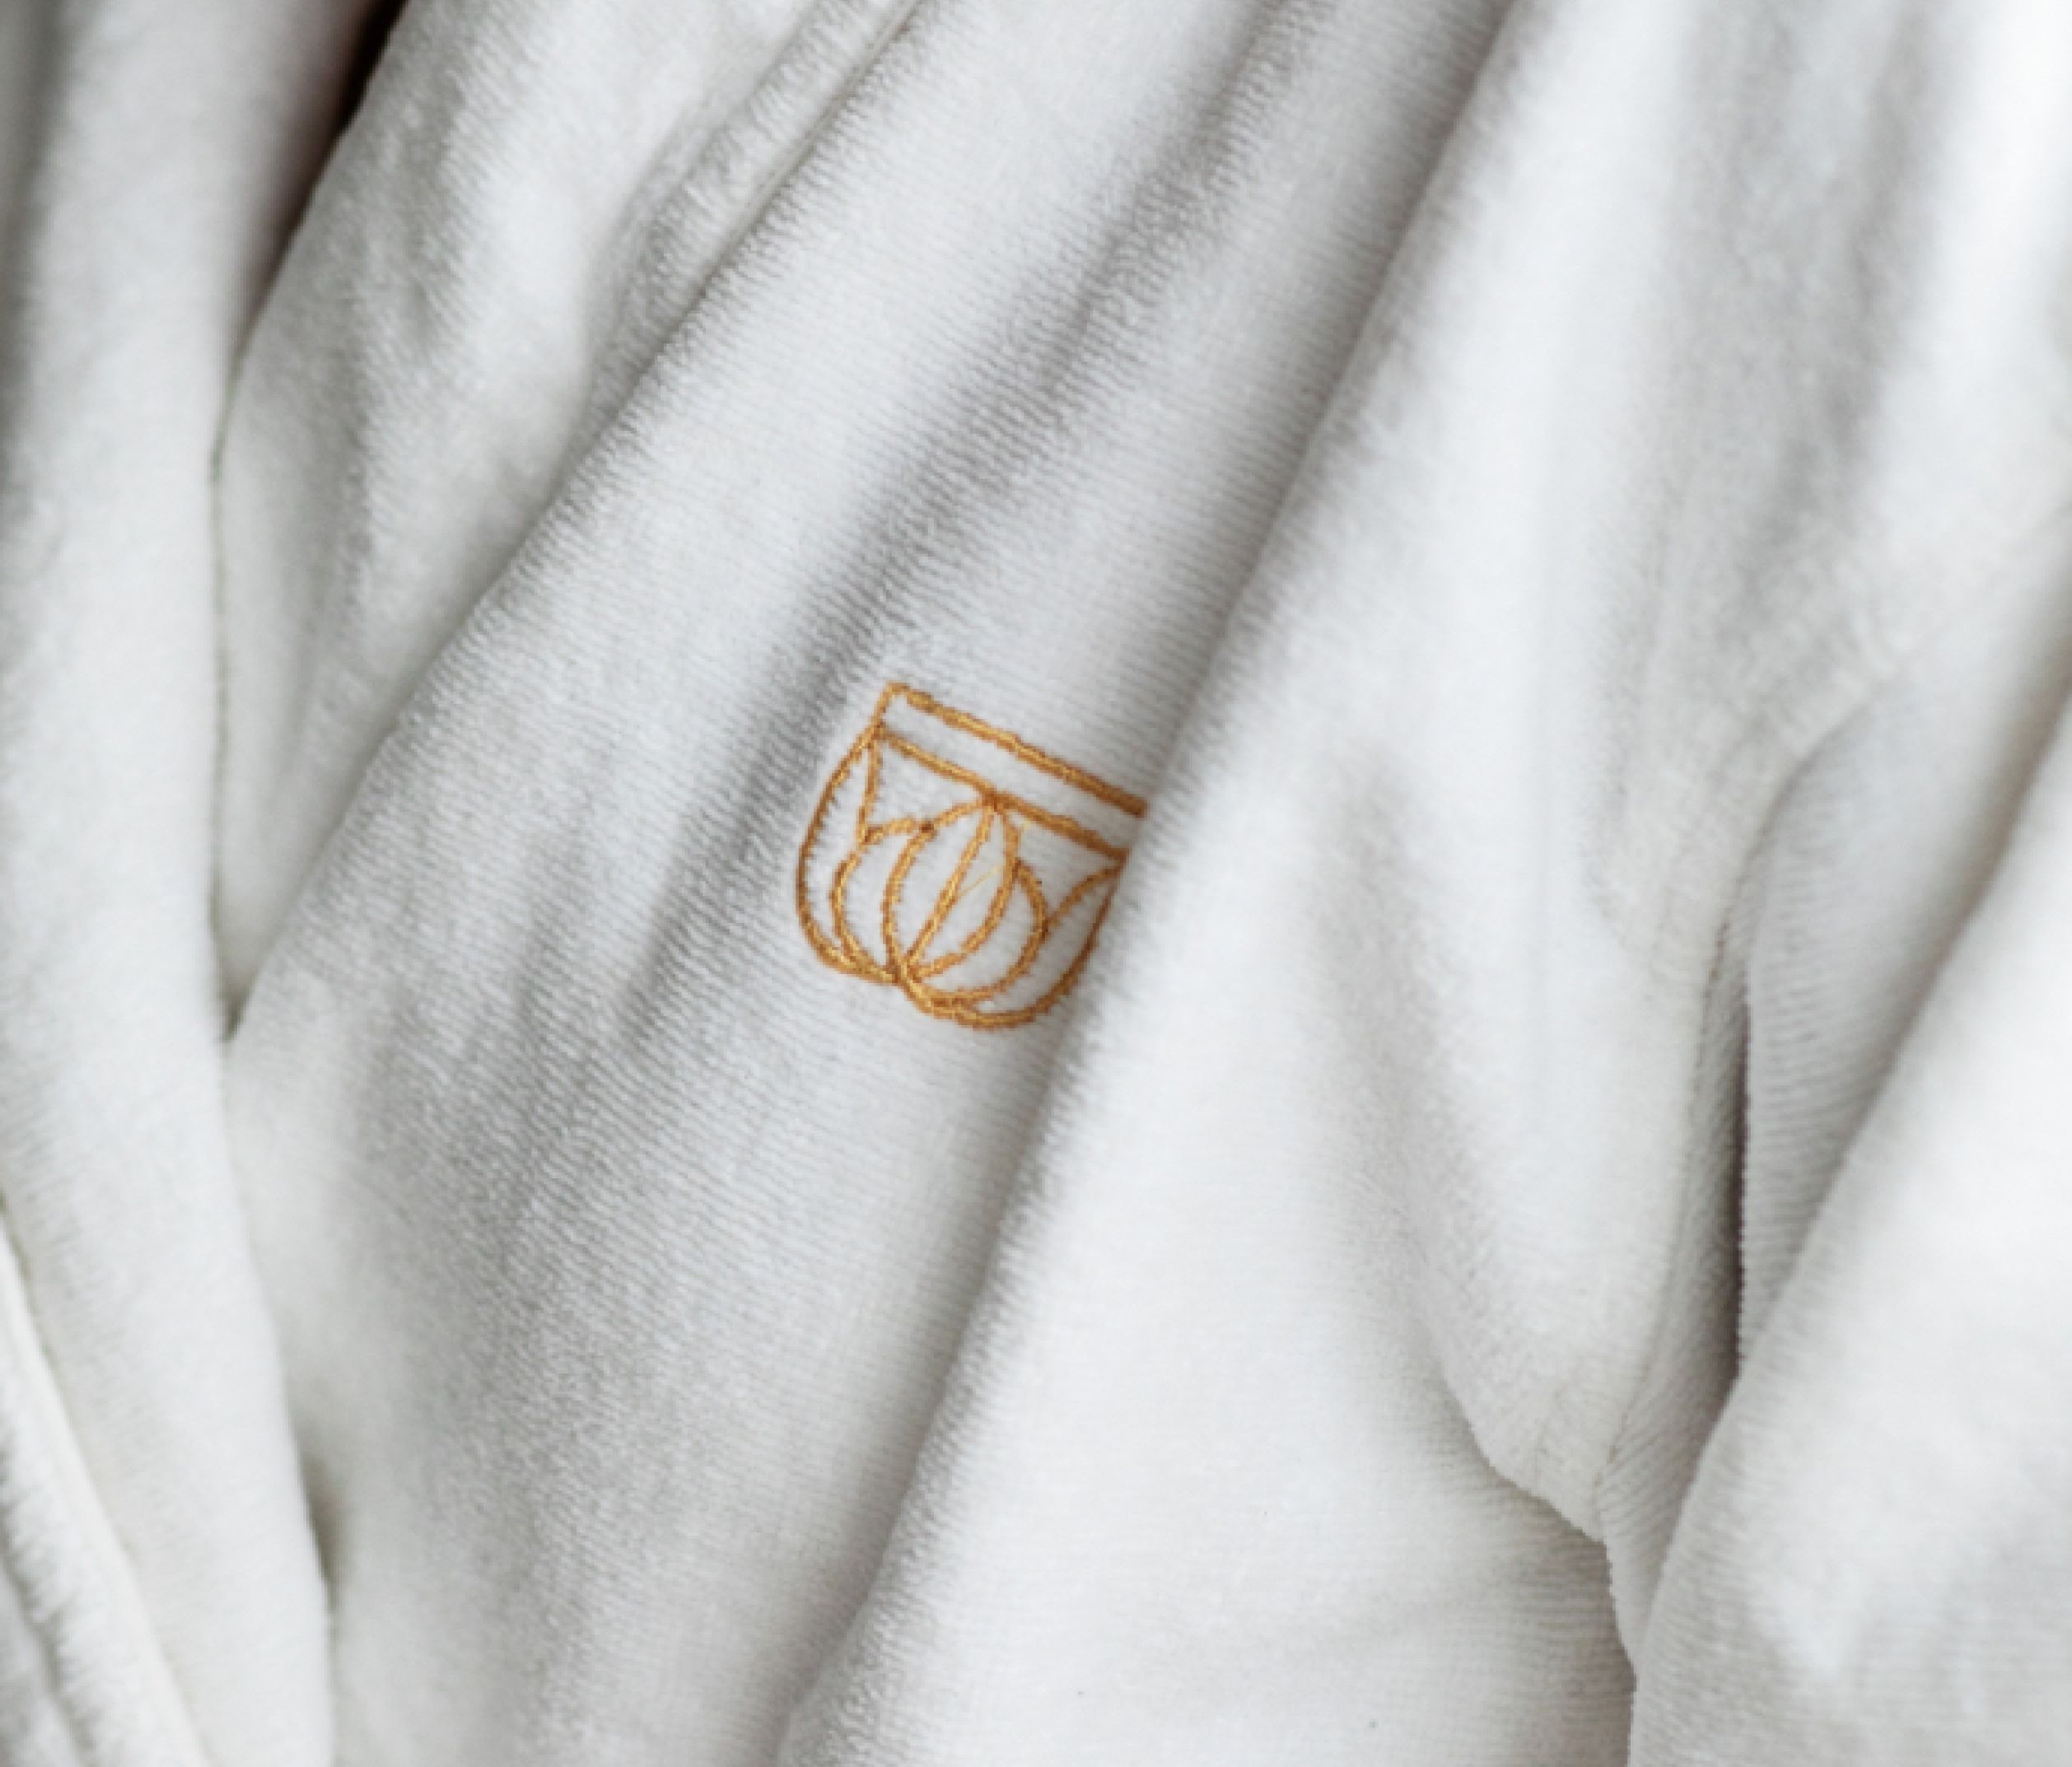 Embroidered Britannia Hotel symbol on a white bathrobe